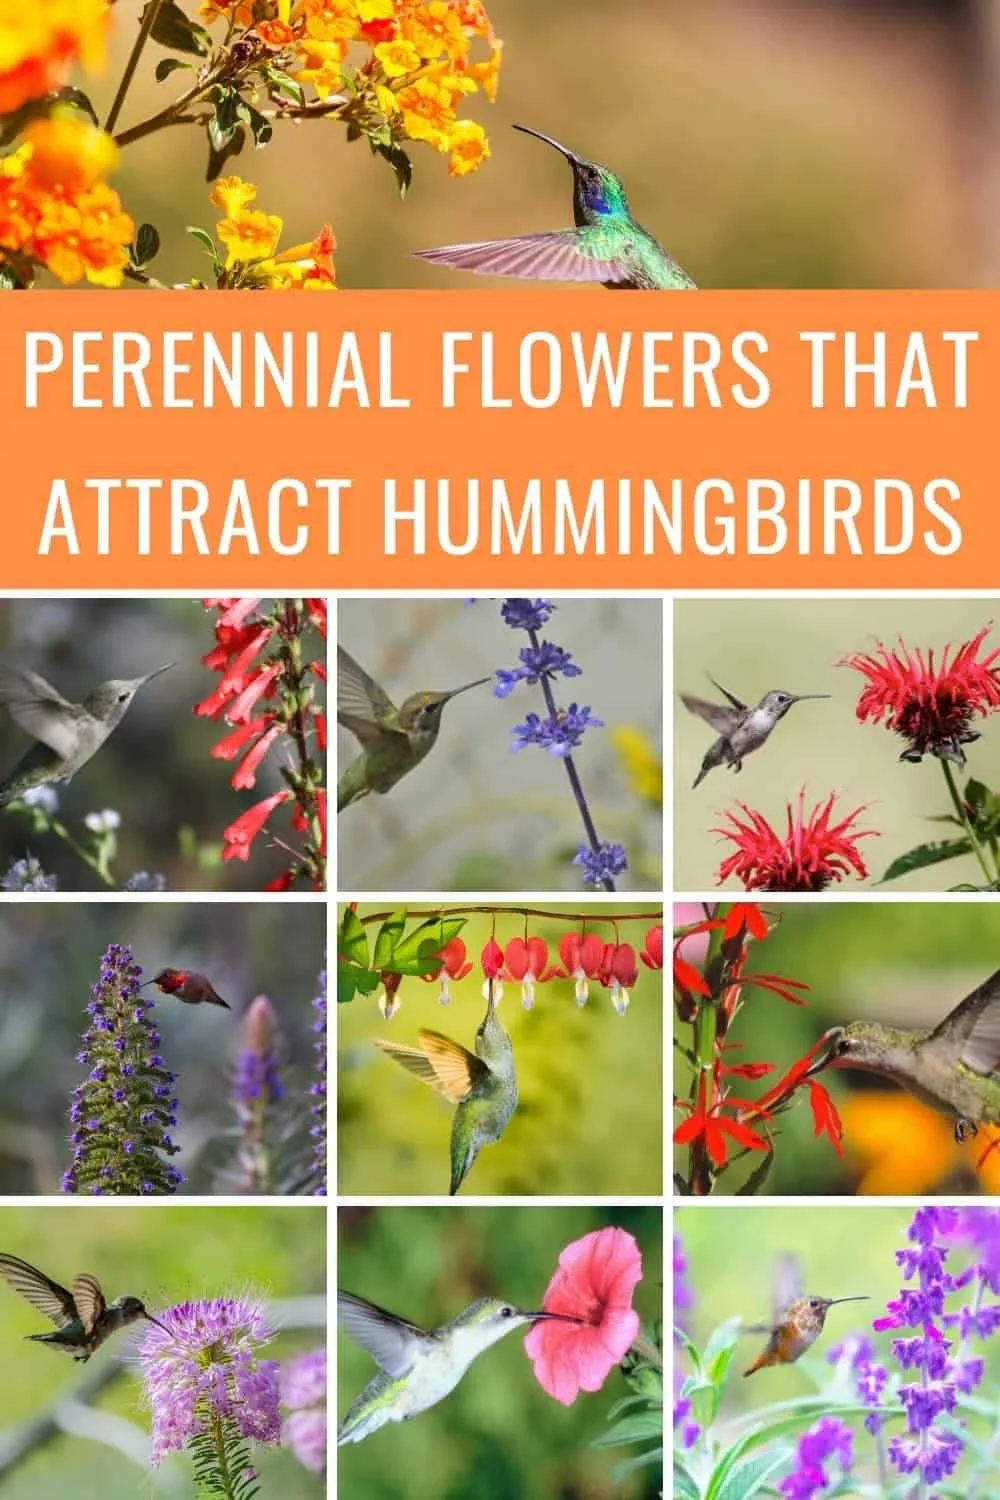 Perennial flowers that attract hummingbirds